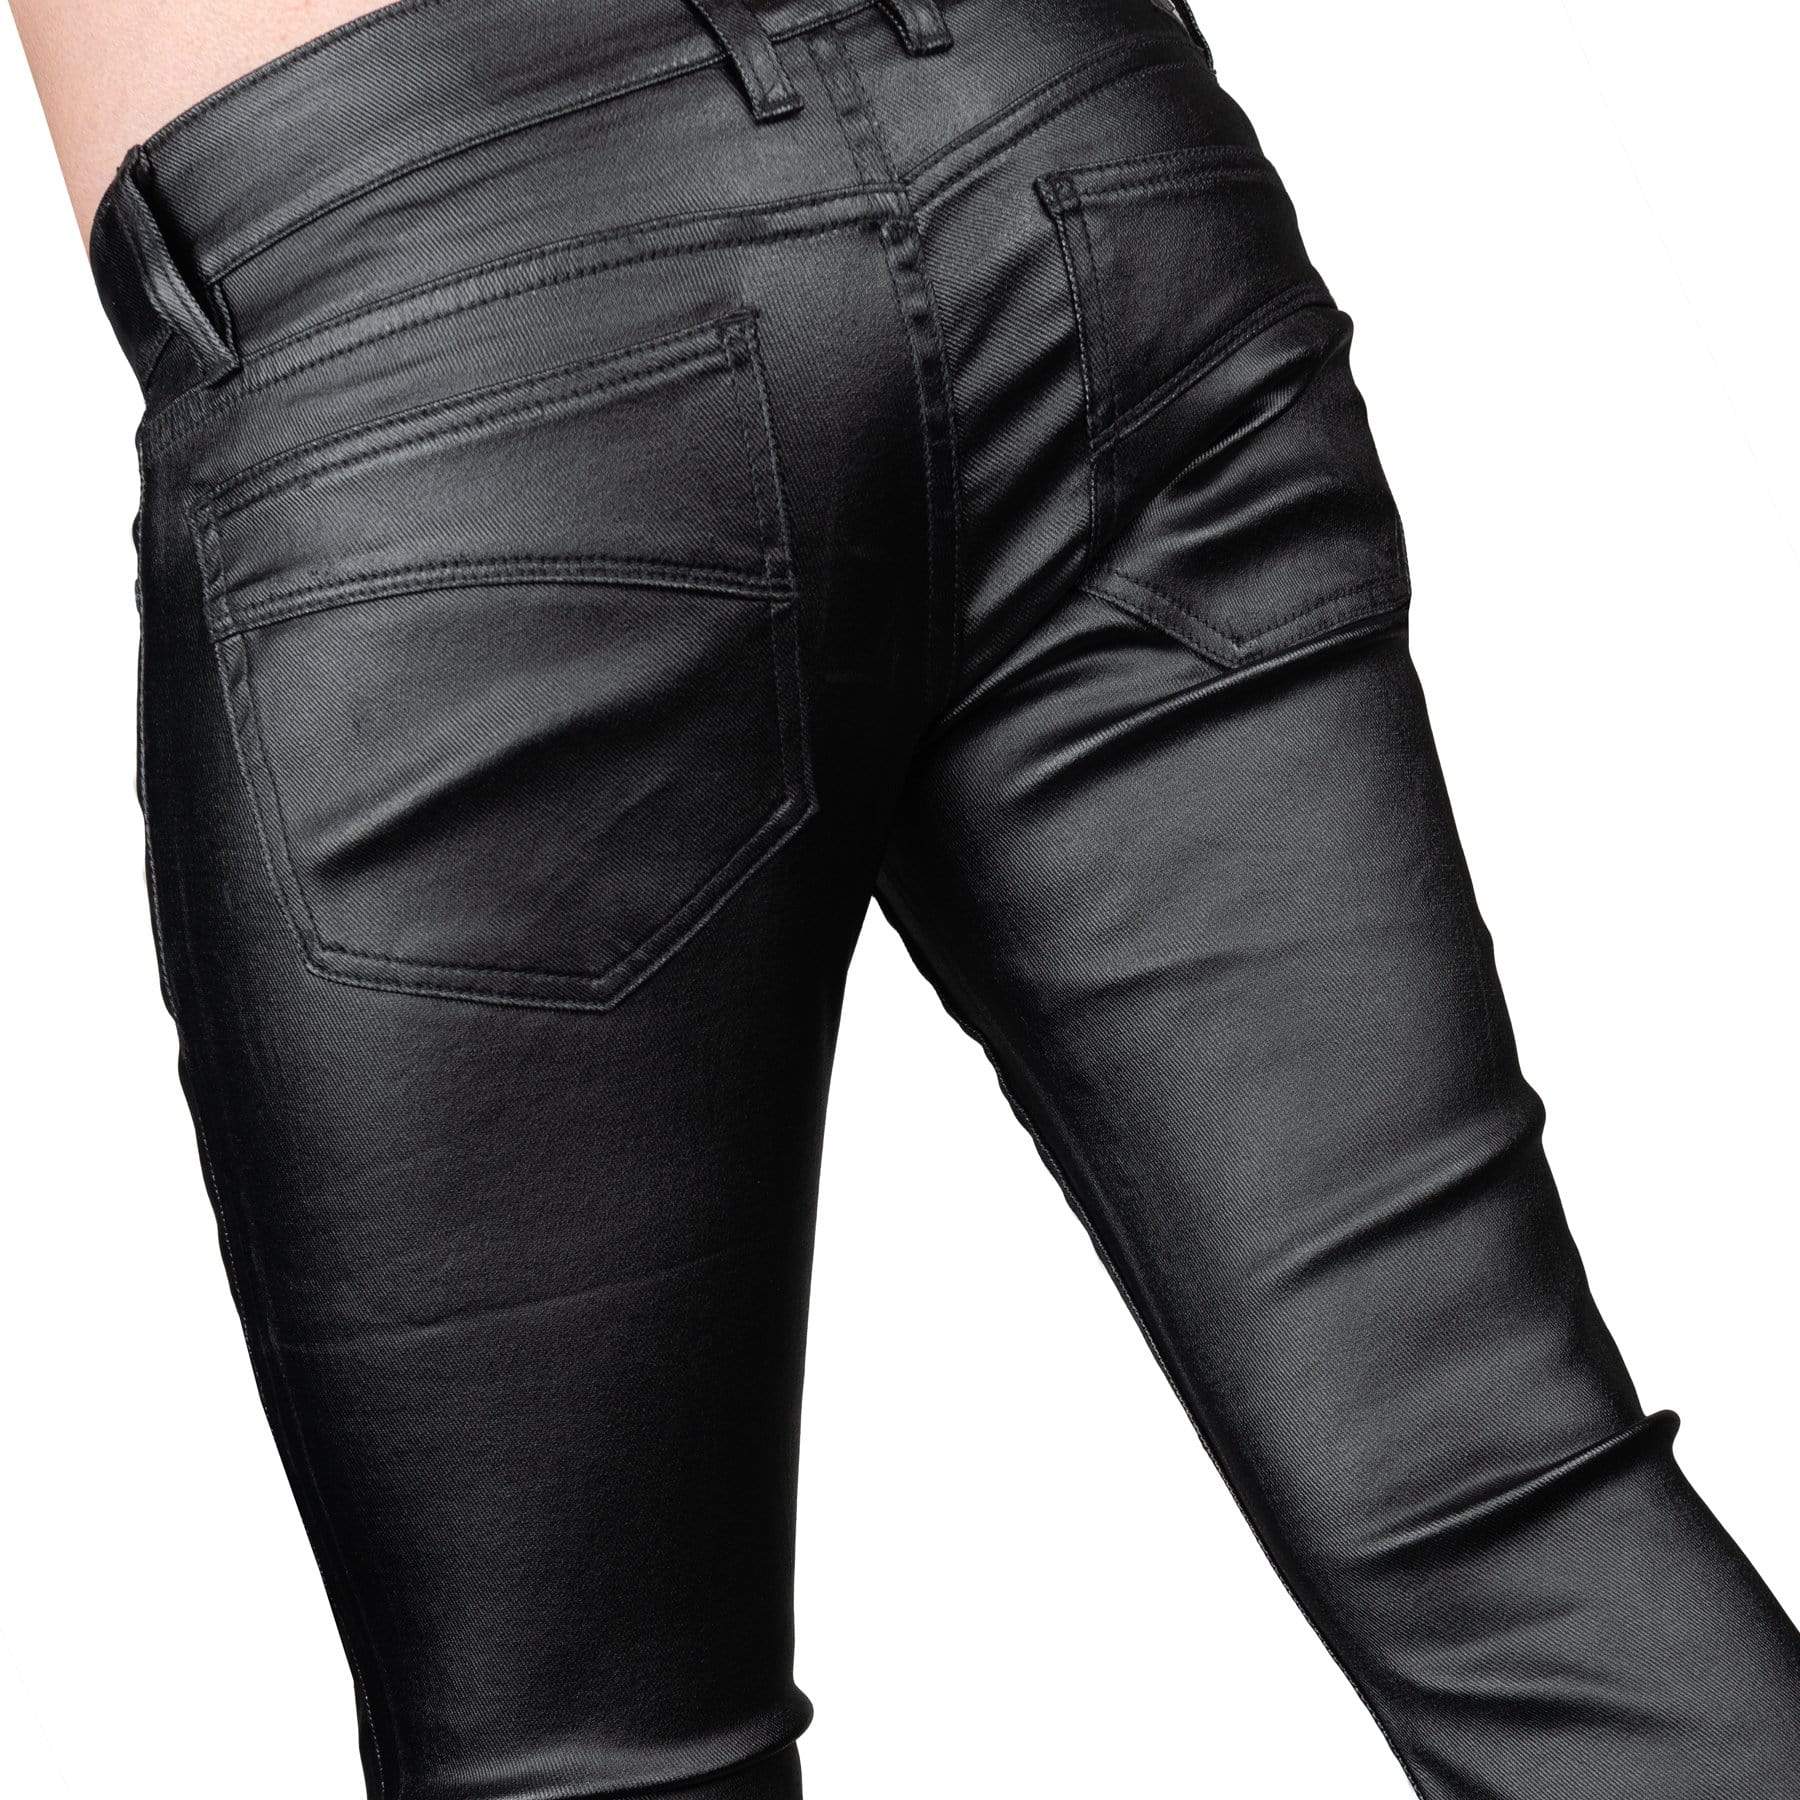 Wornstar Clothing Mens Pants Hellraiser Waxed Denim Jeans - Black